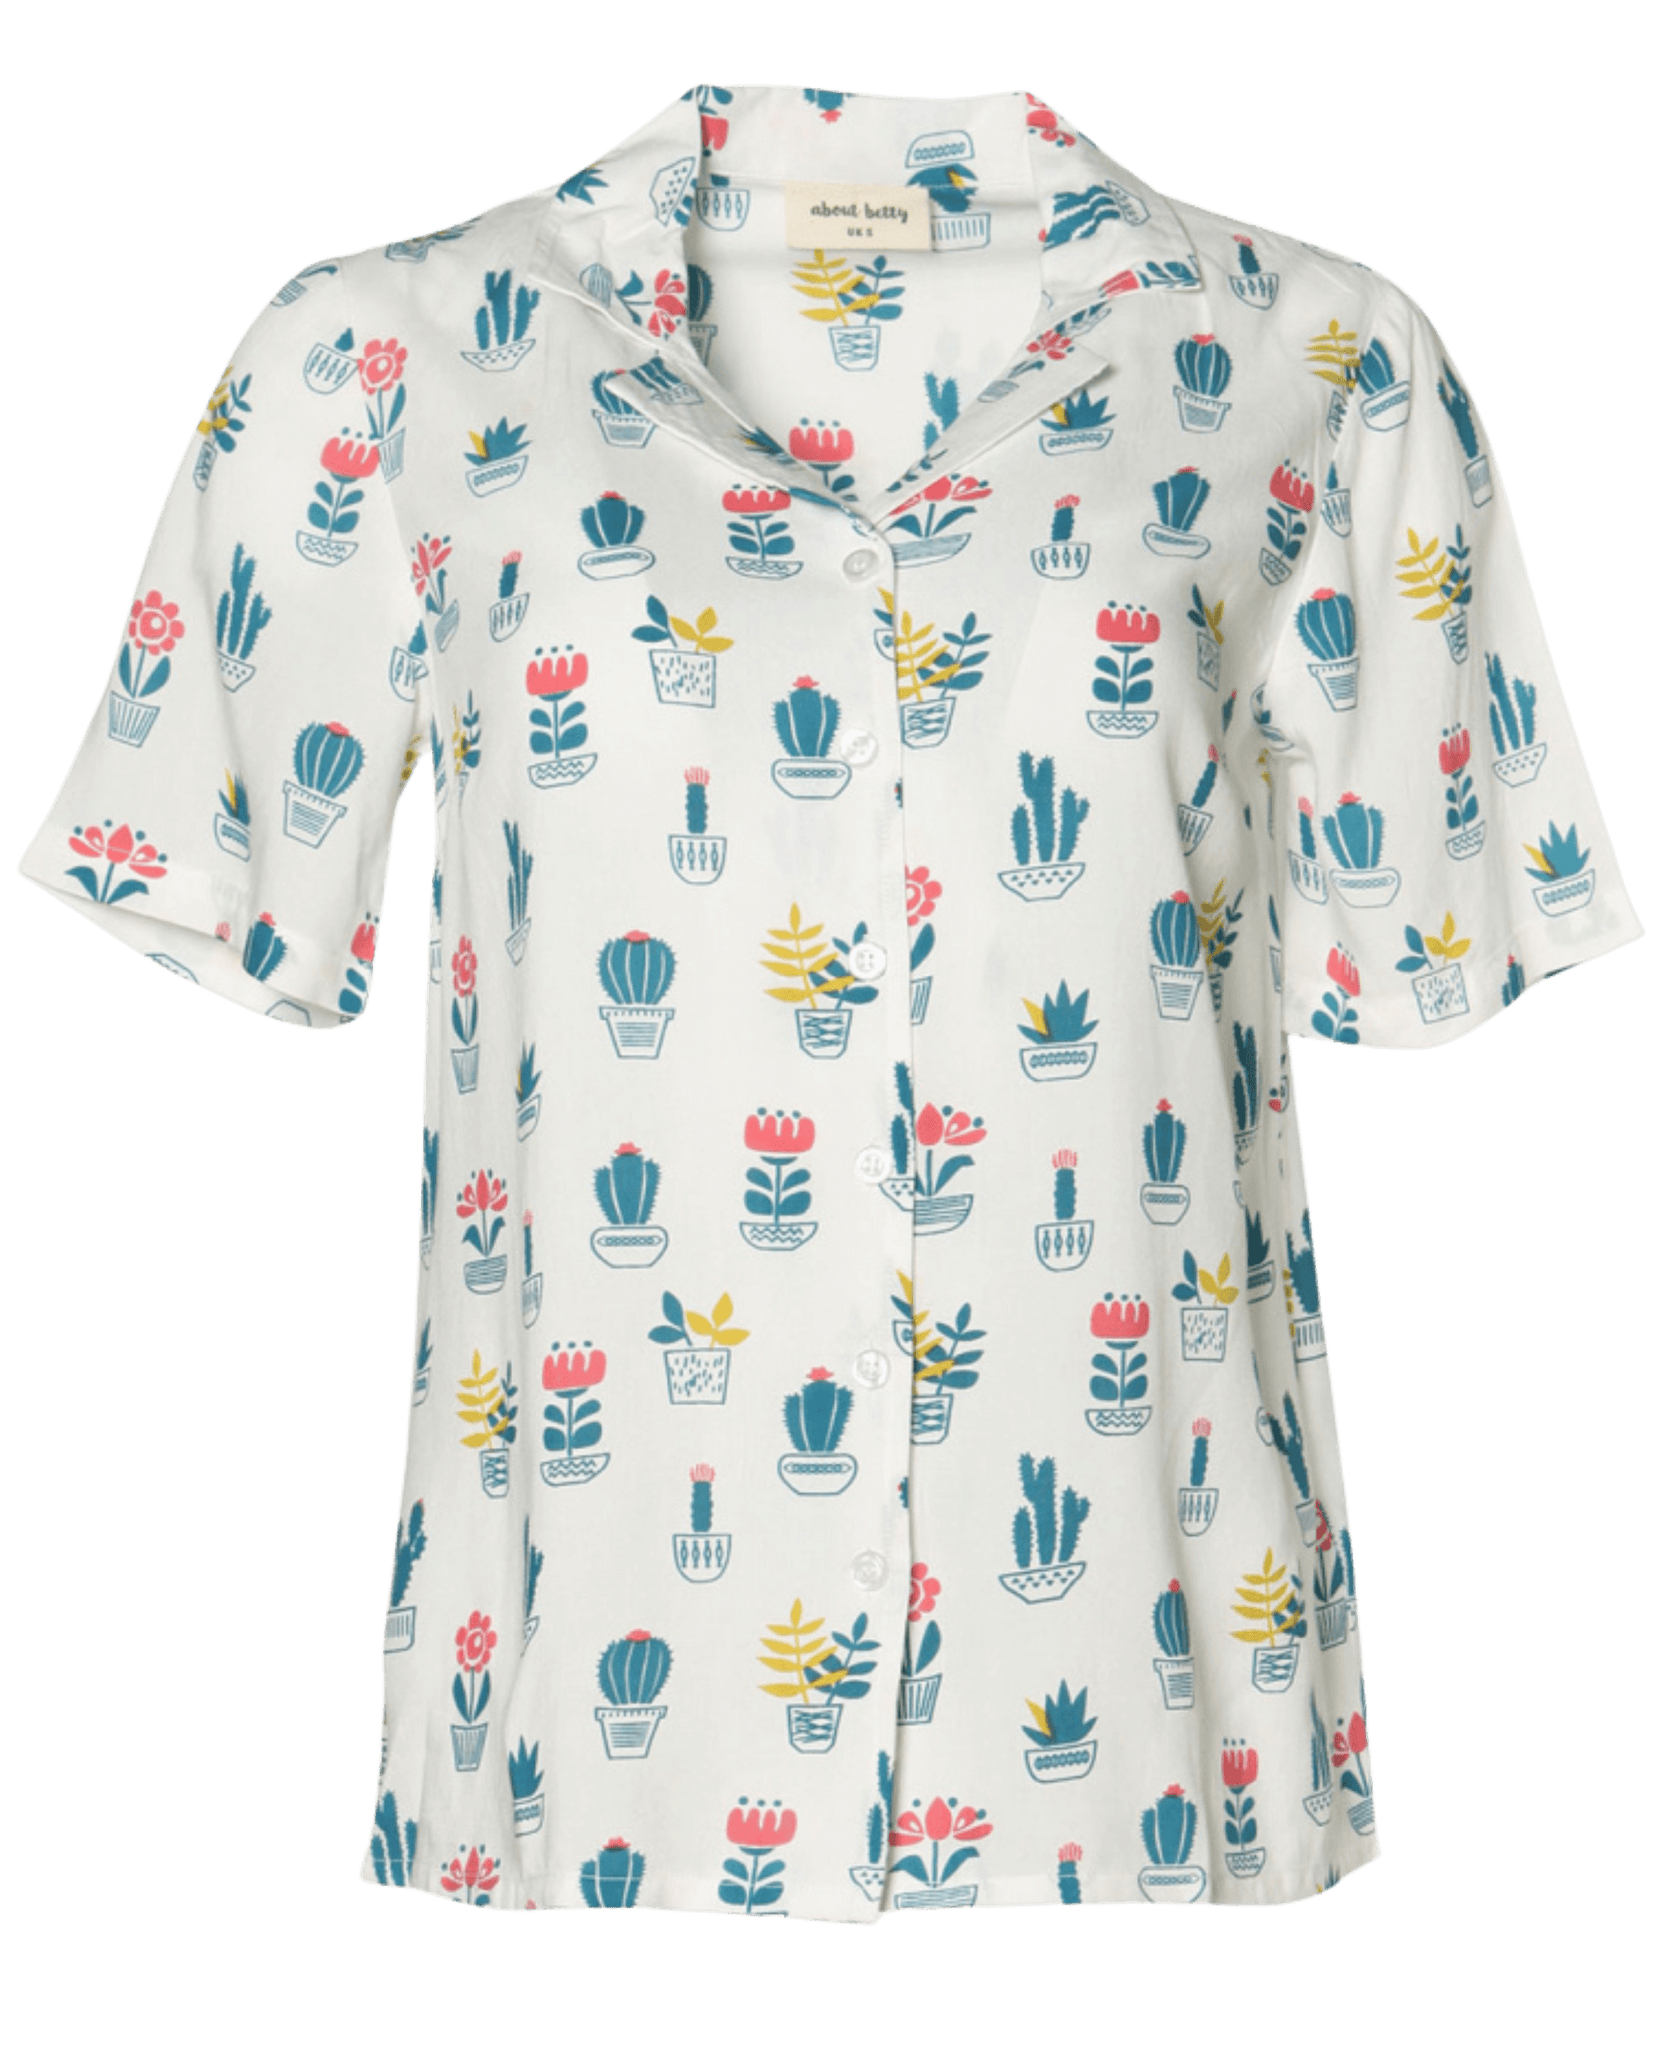 Camisa About Betty Cactus - ECRU